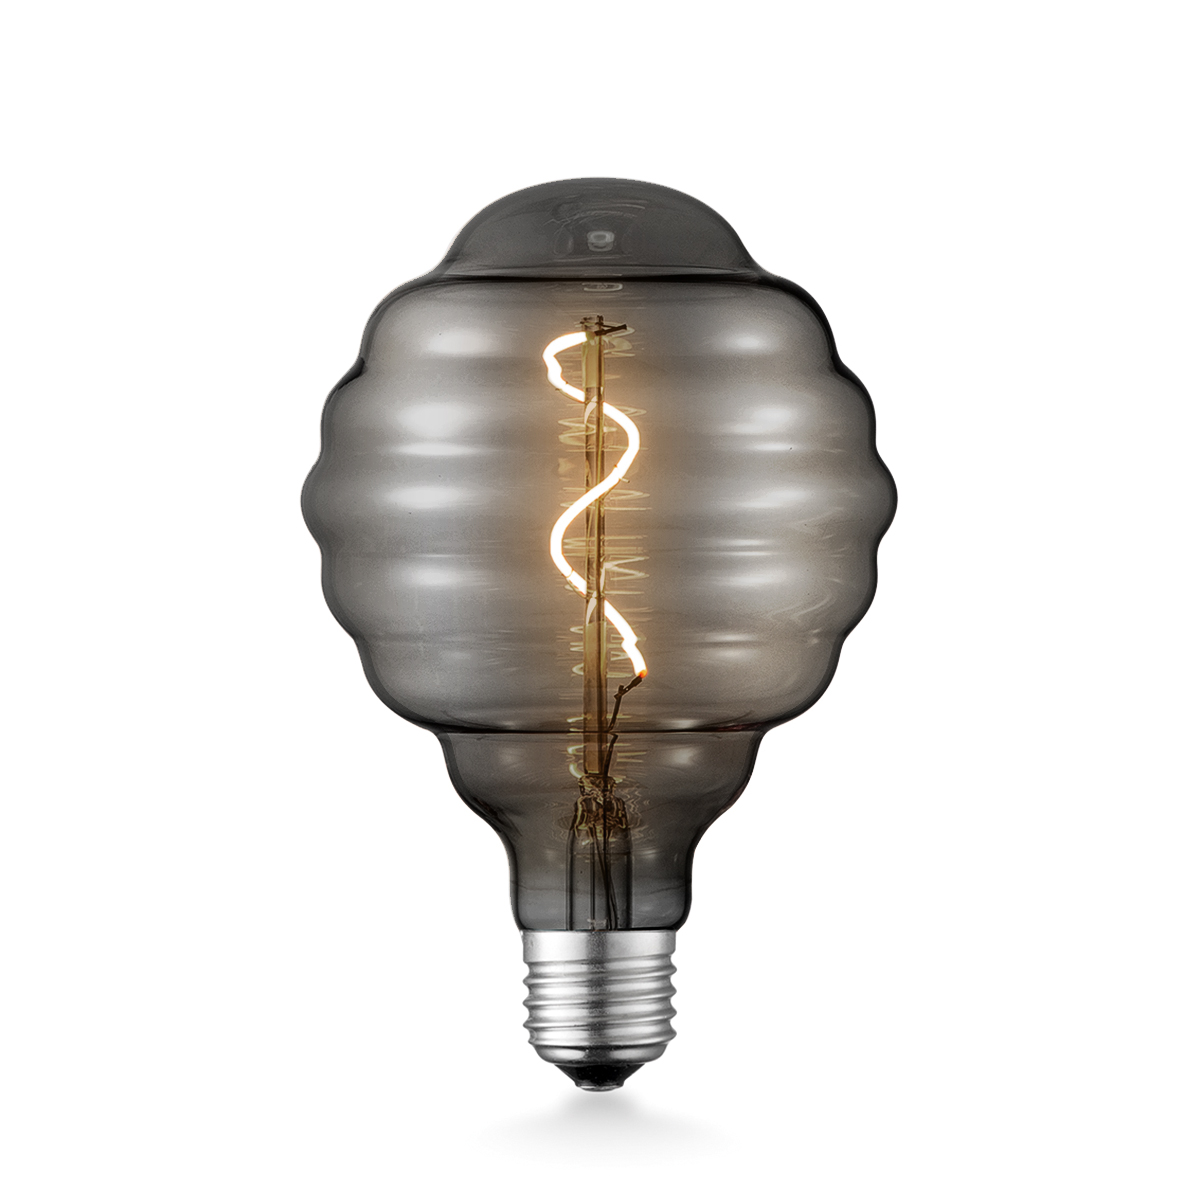 Tangla lighting - TLB-8022-04TM - LED Light Bulb Single Spiral filament - special 4W titanium - medium supple - dimmable - E27